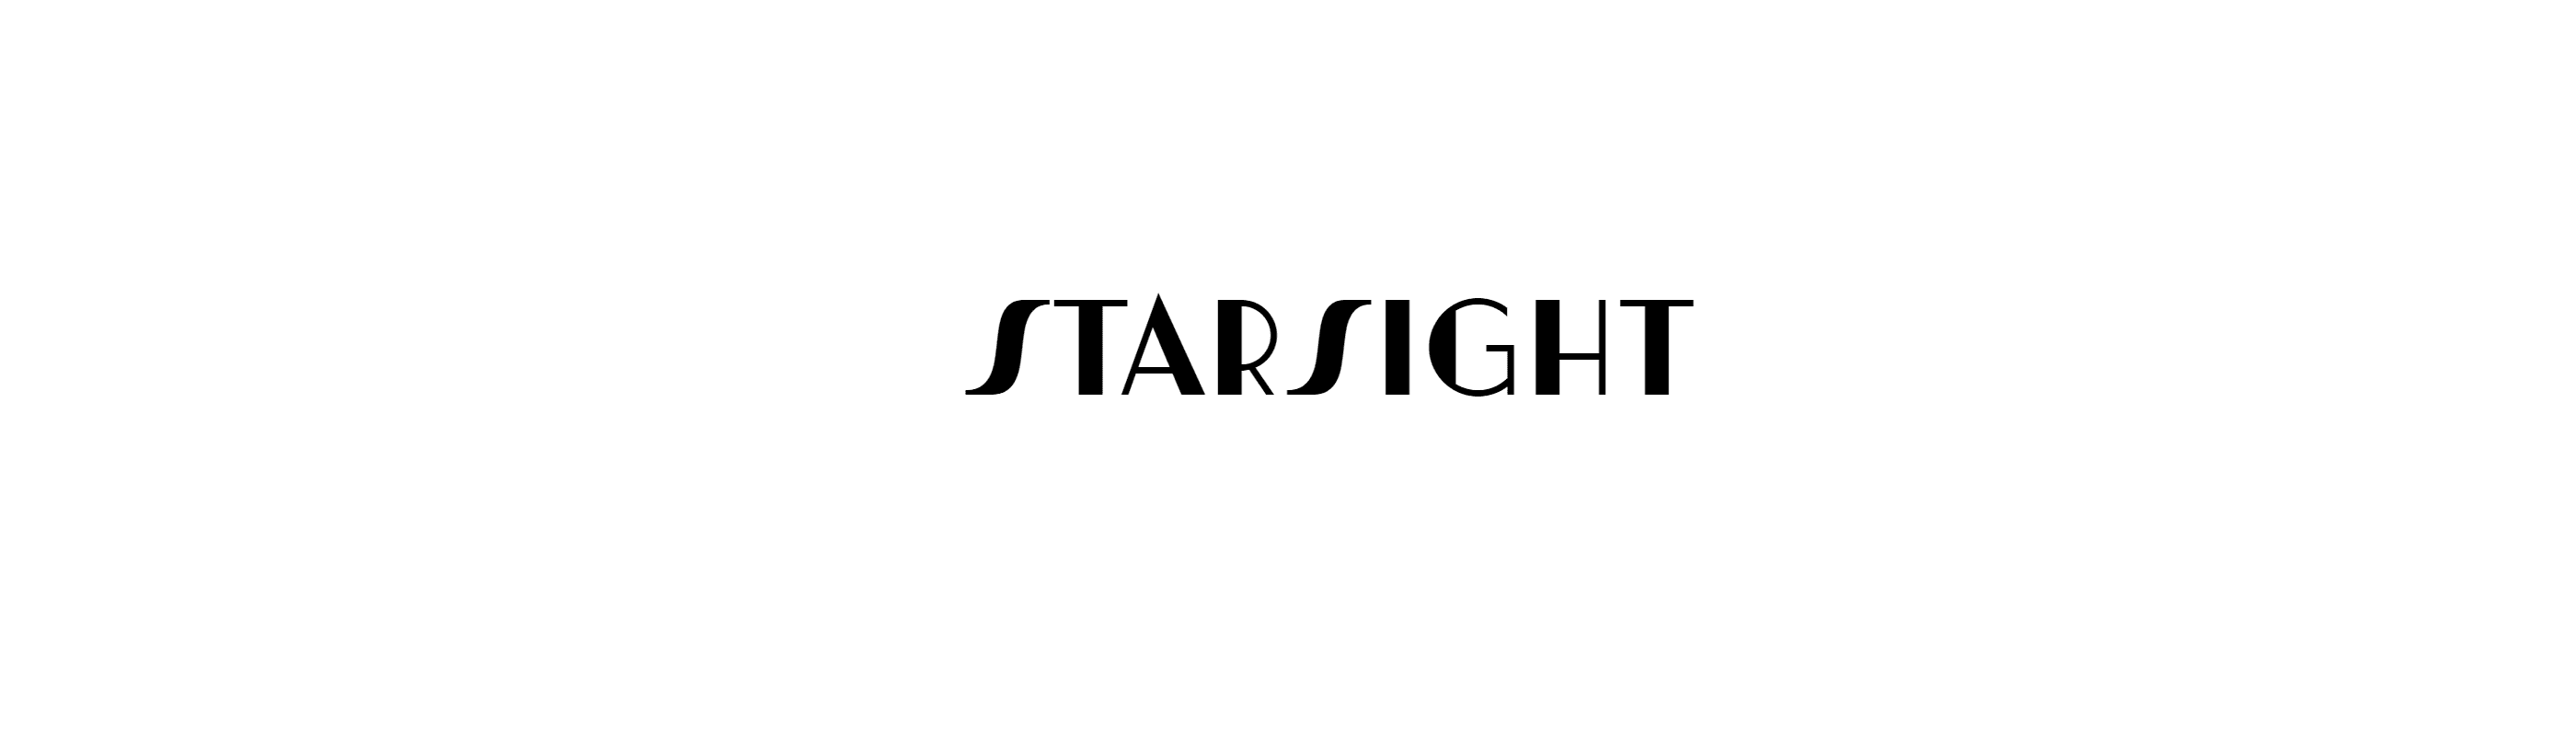 starsight banner